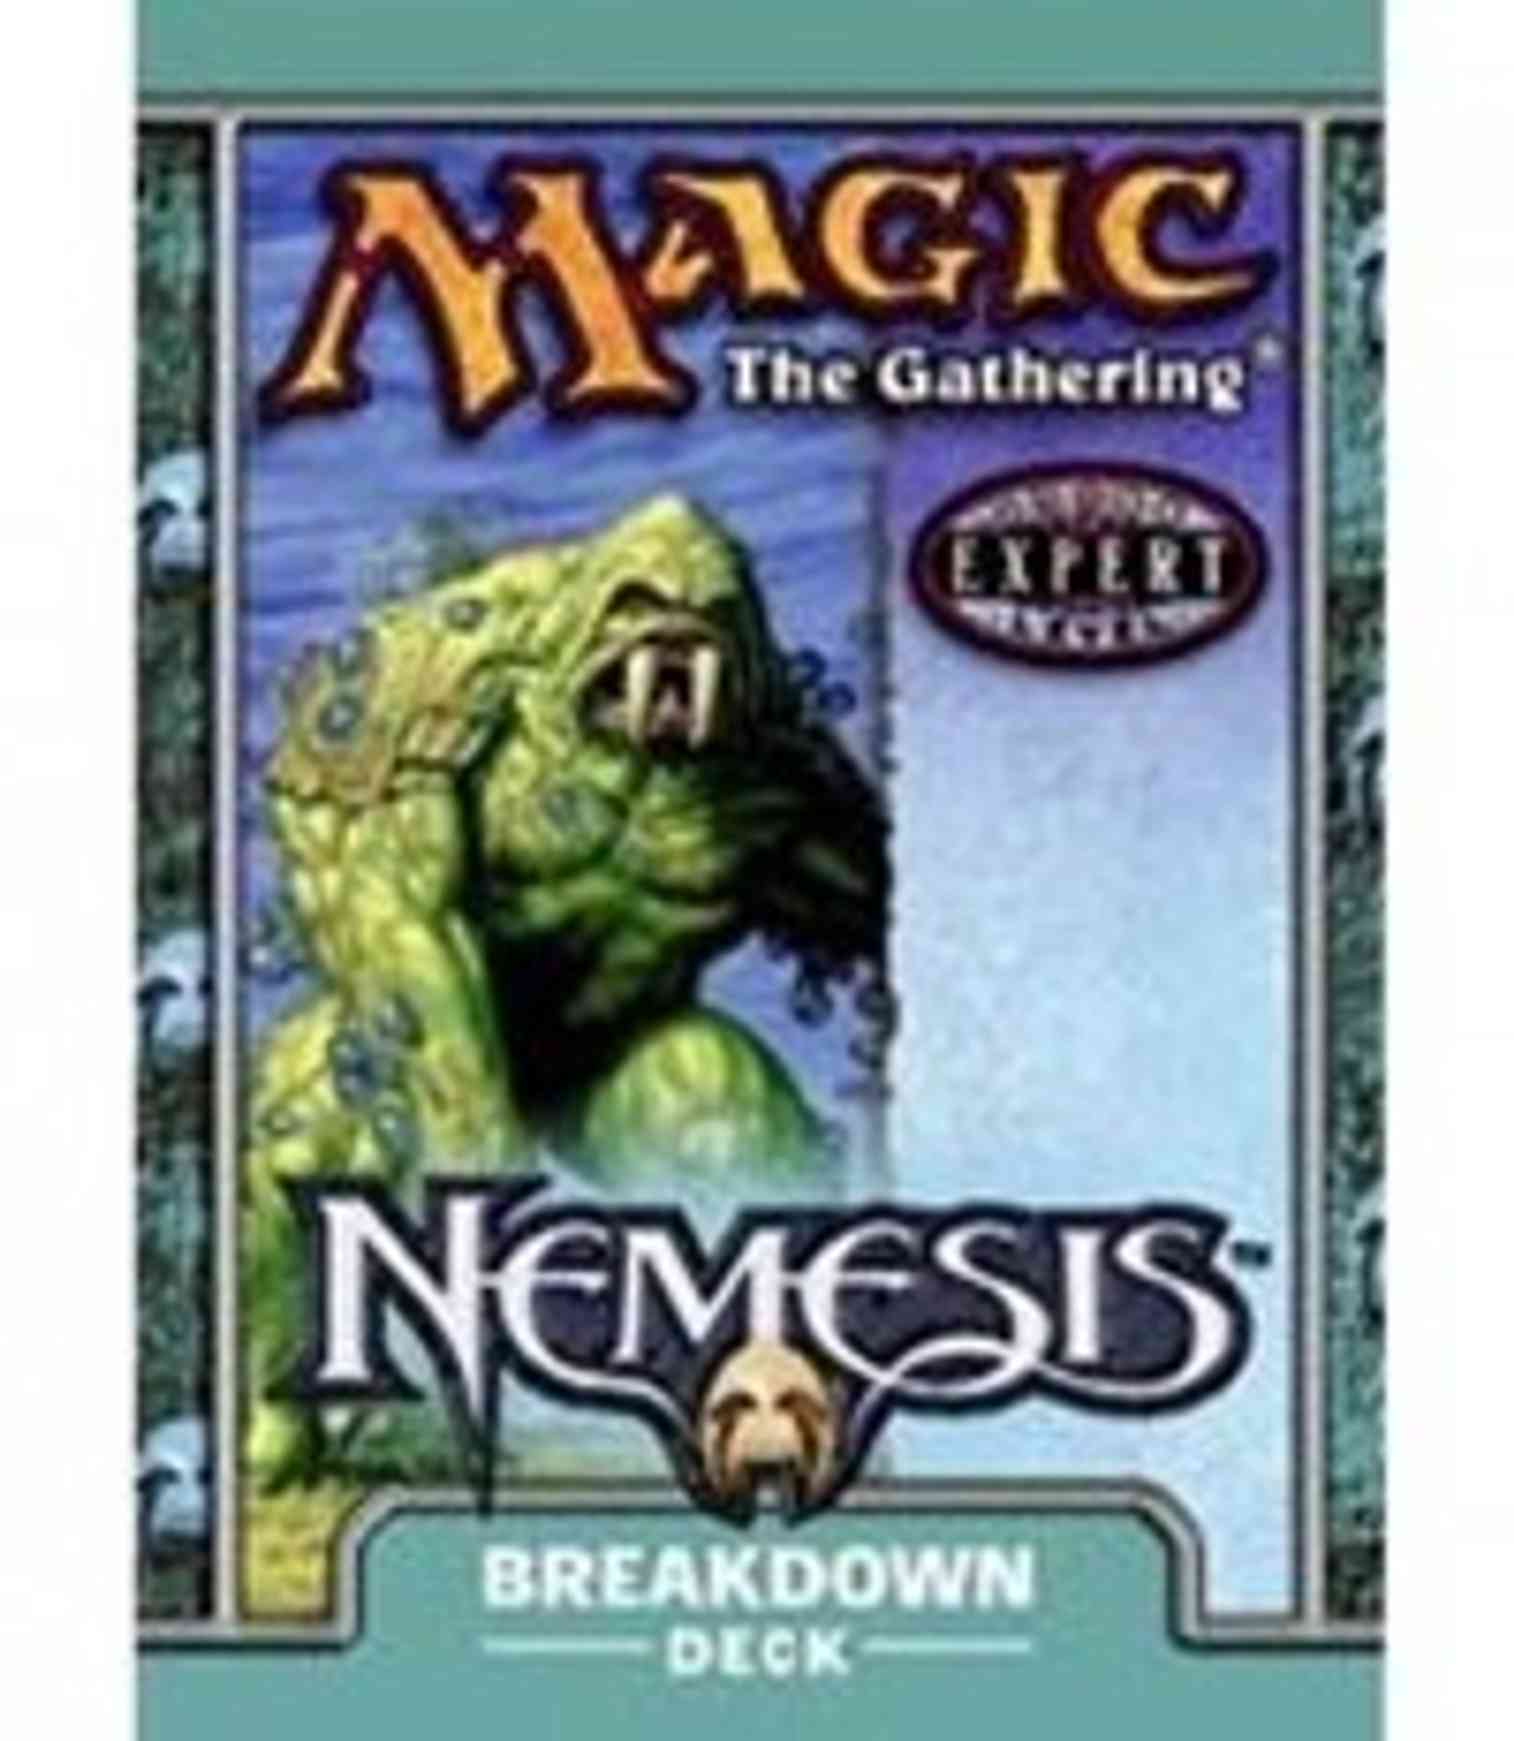 Nemesis Theme Deck - Breakdown magic card front